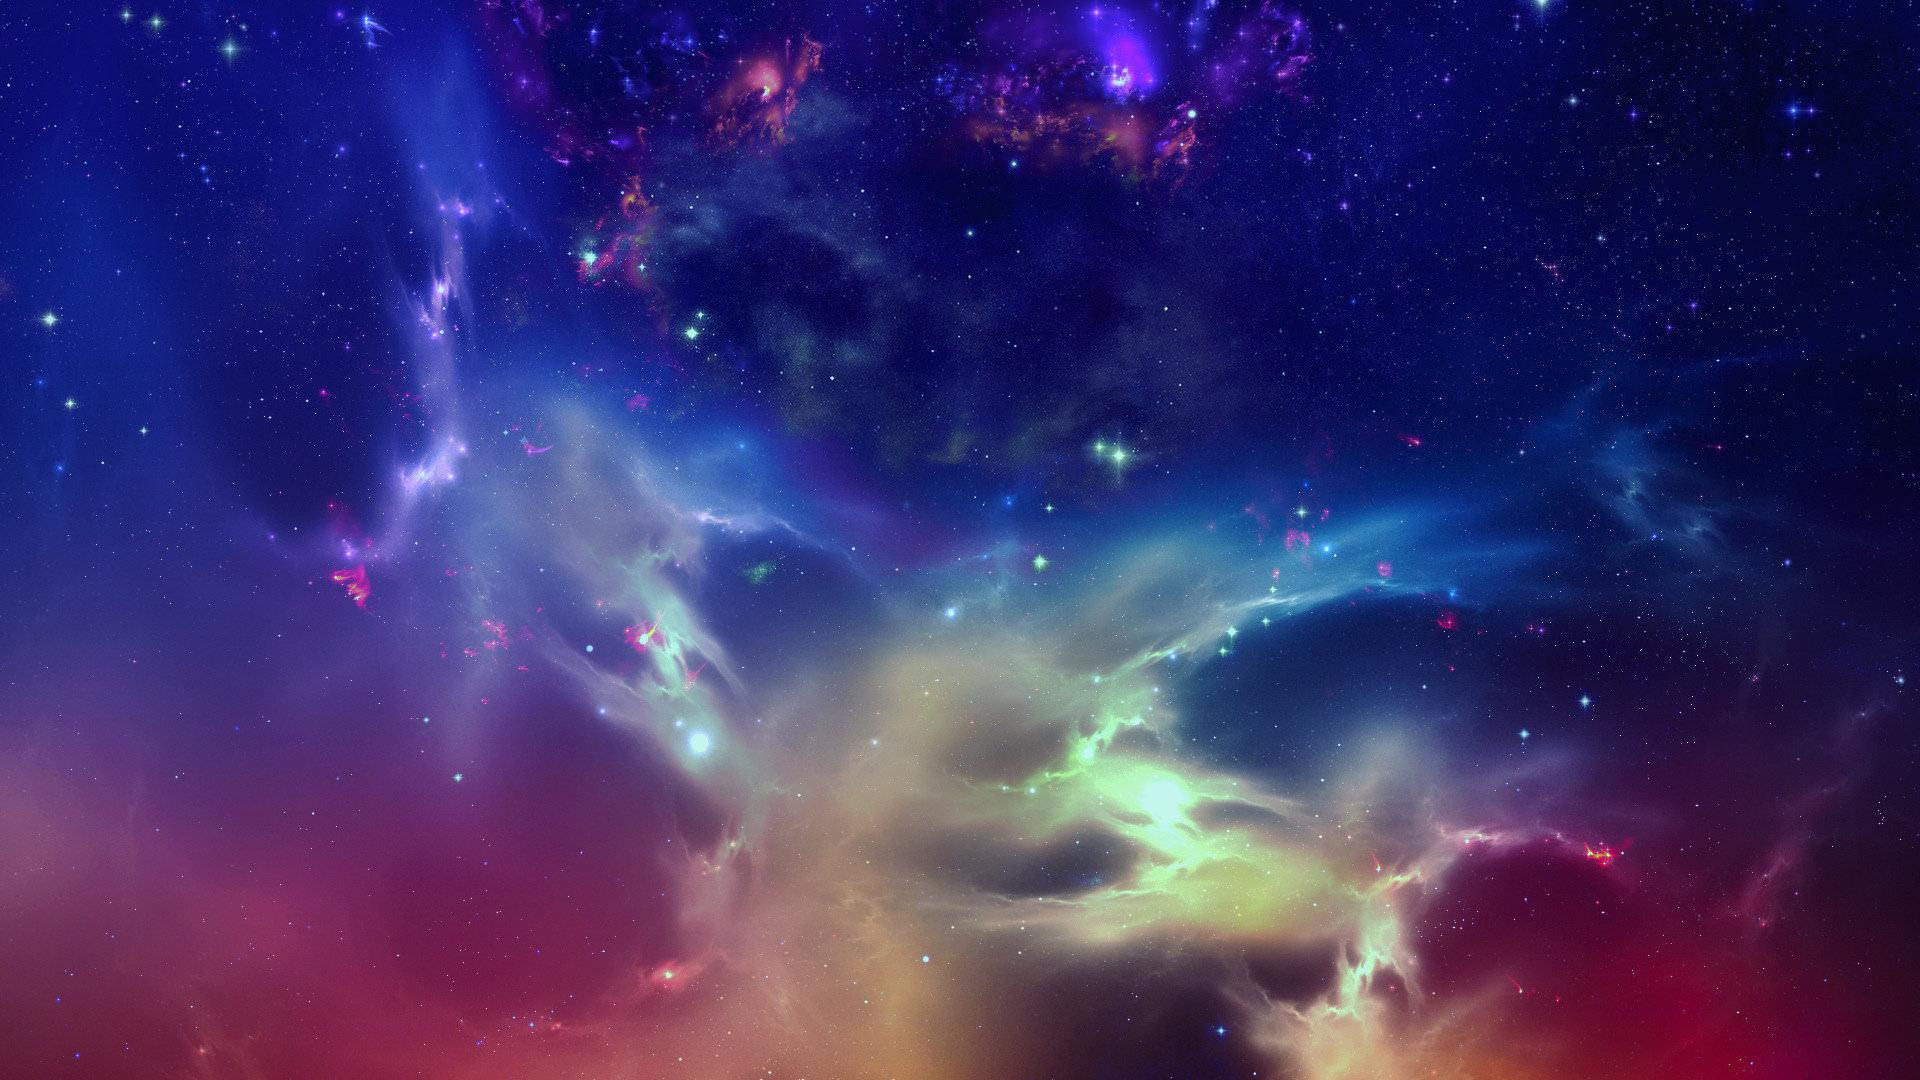 Space wallpaper HD for desktop background